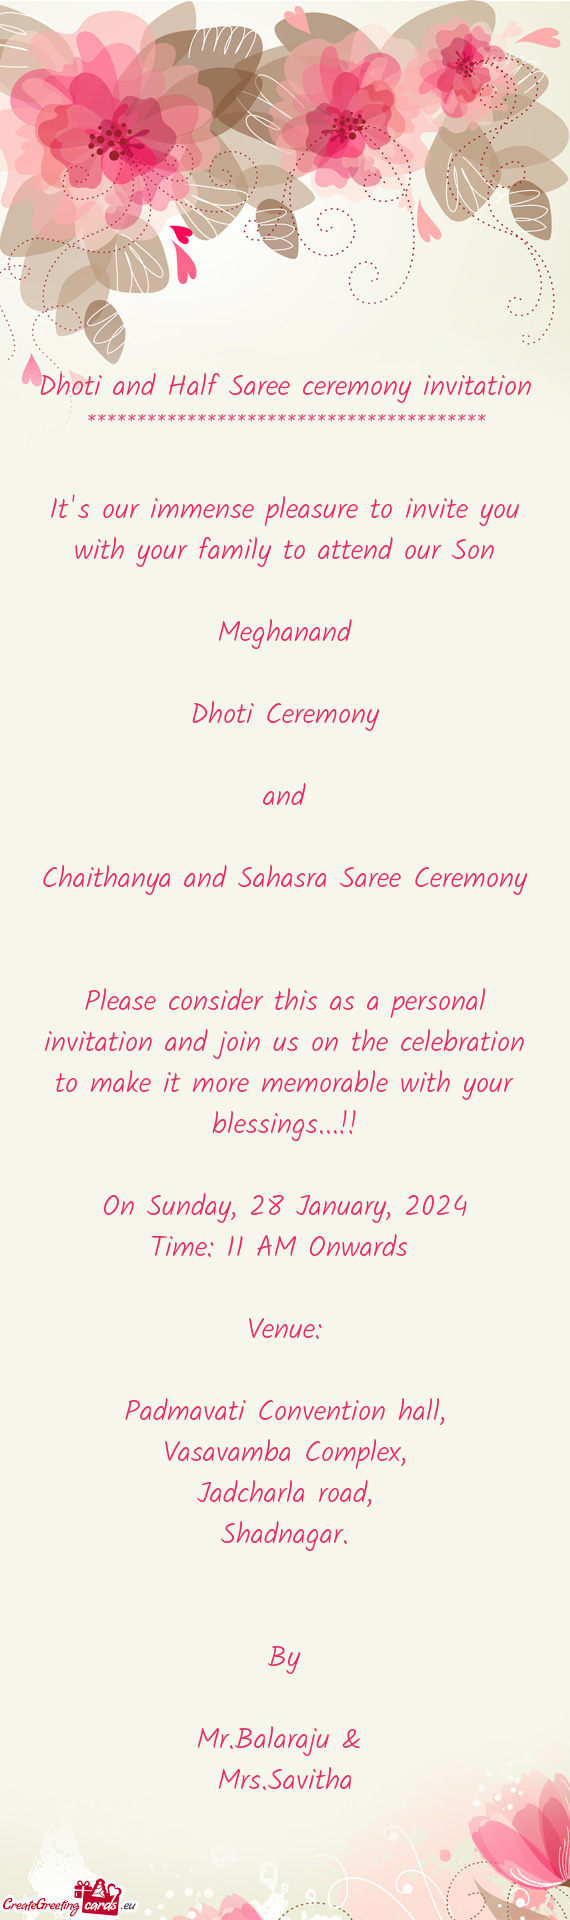 Chaithanya and Sahasra Saree Ceremony